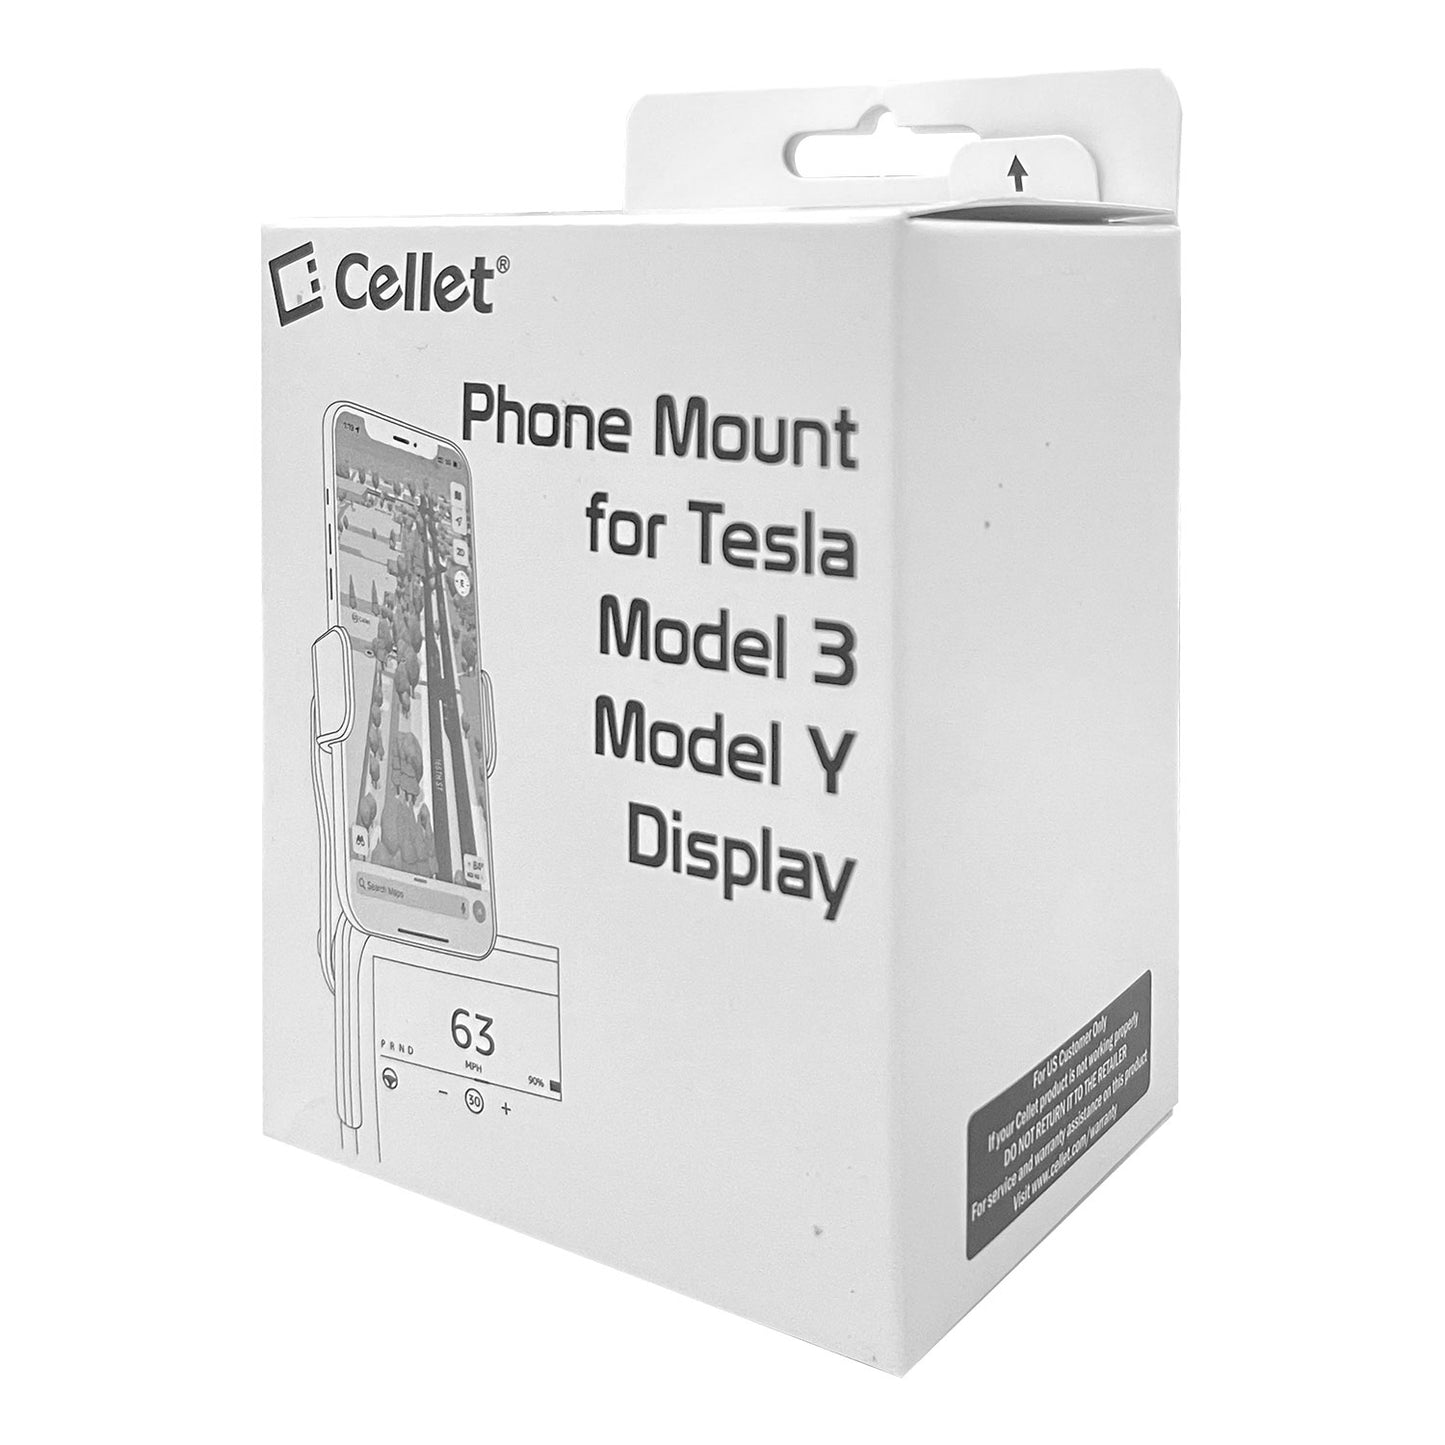 Phone Mount for Tesla's Digital display Compatible to Tesla Model 3 and Model Y